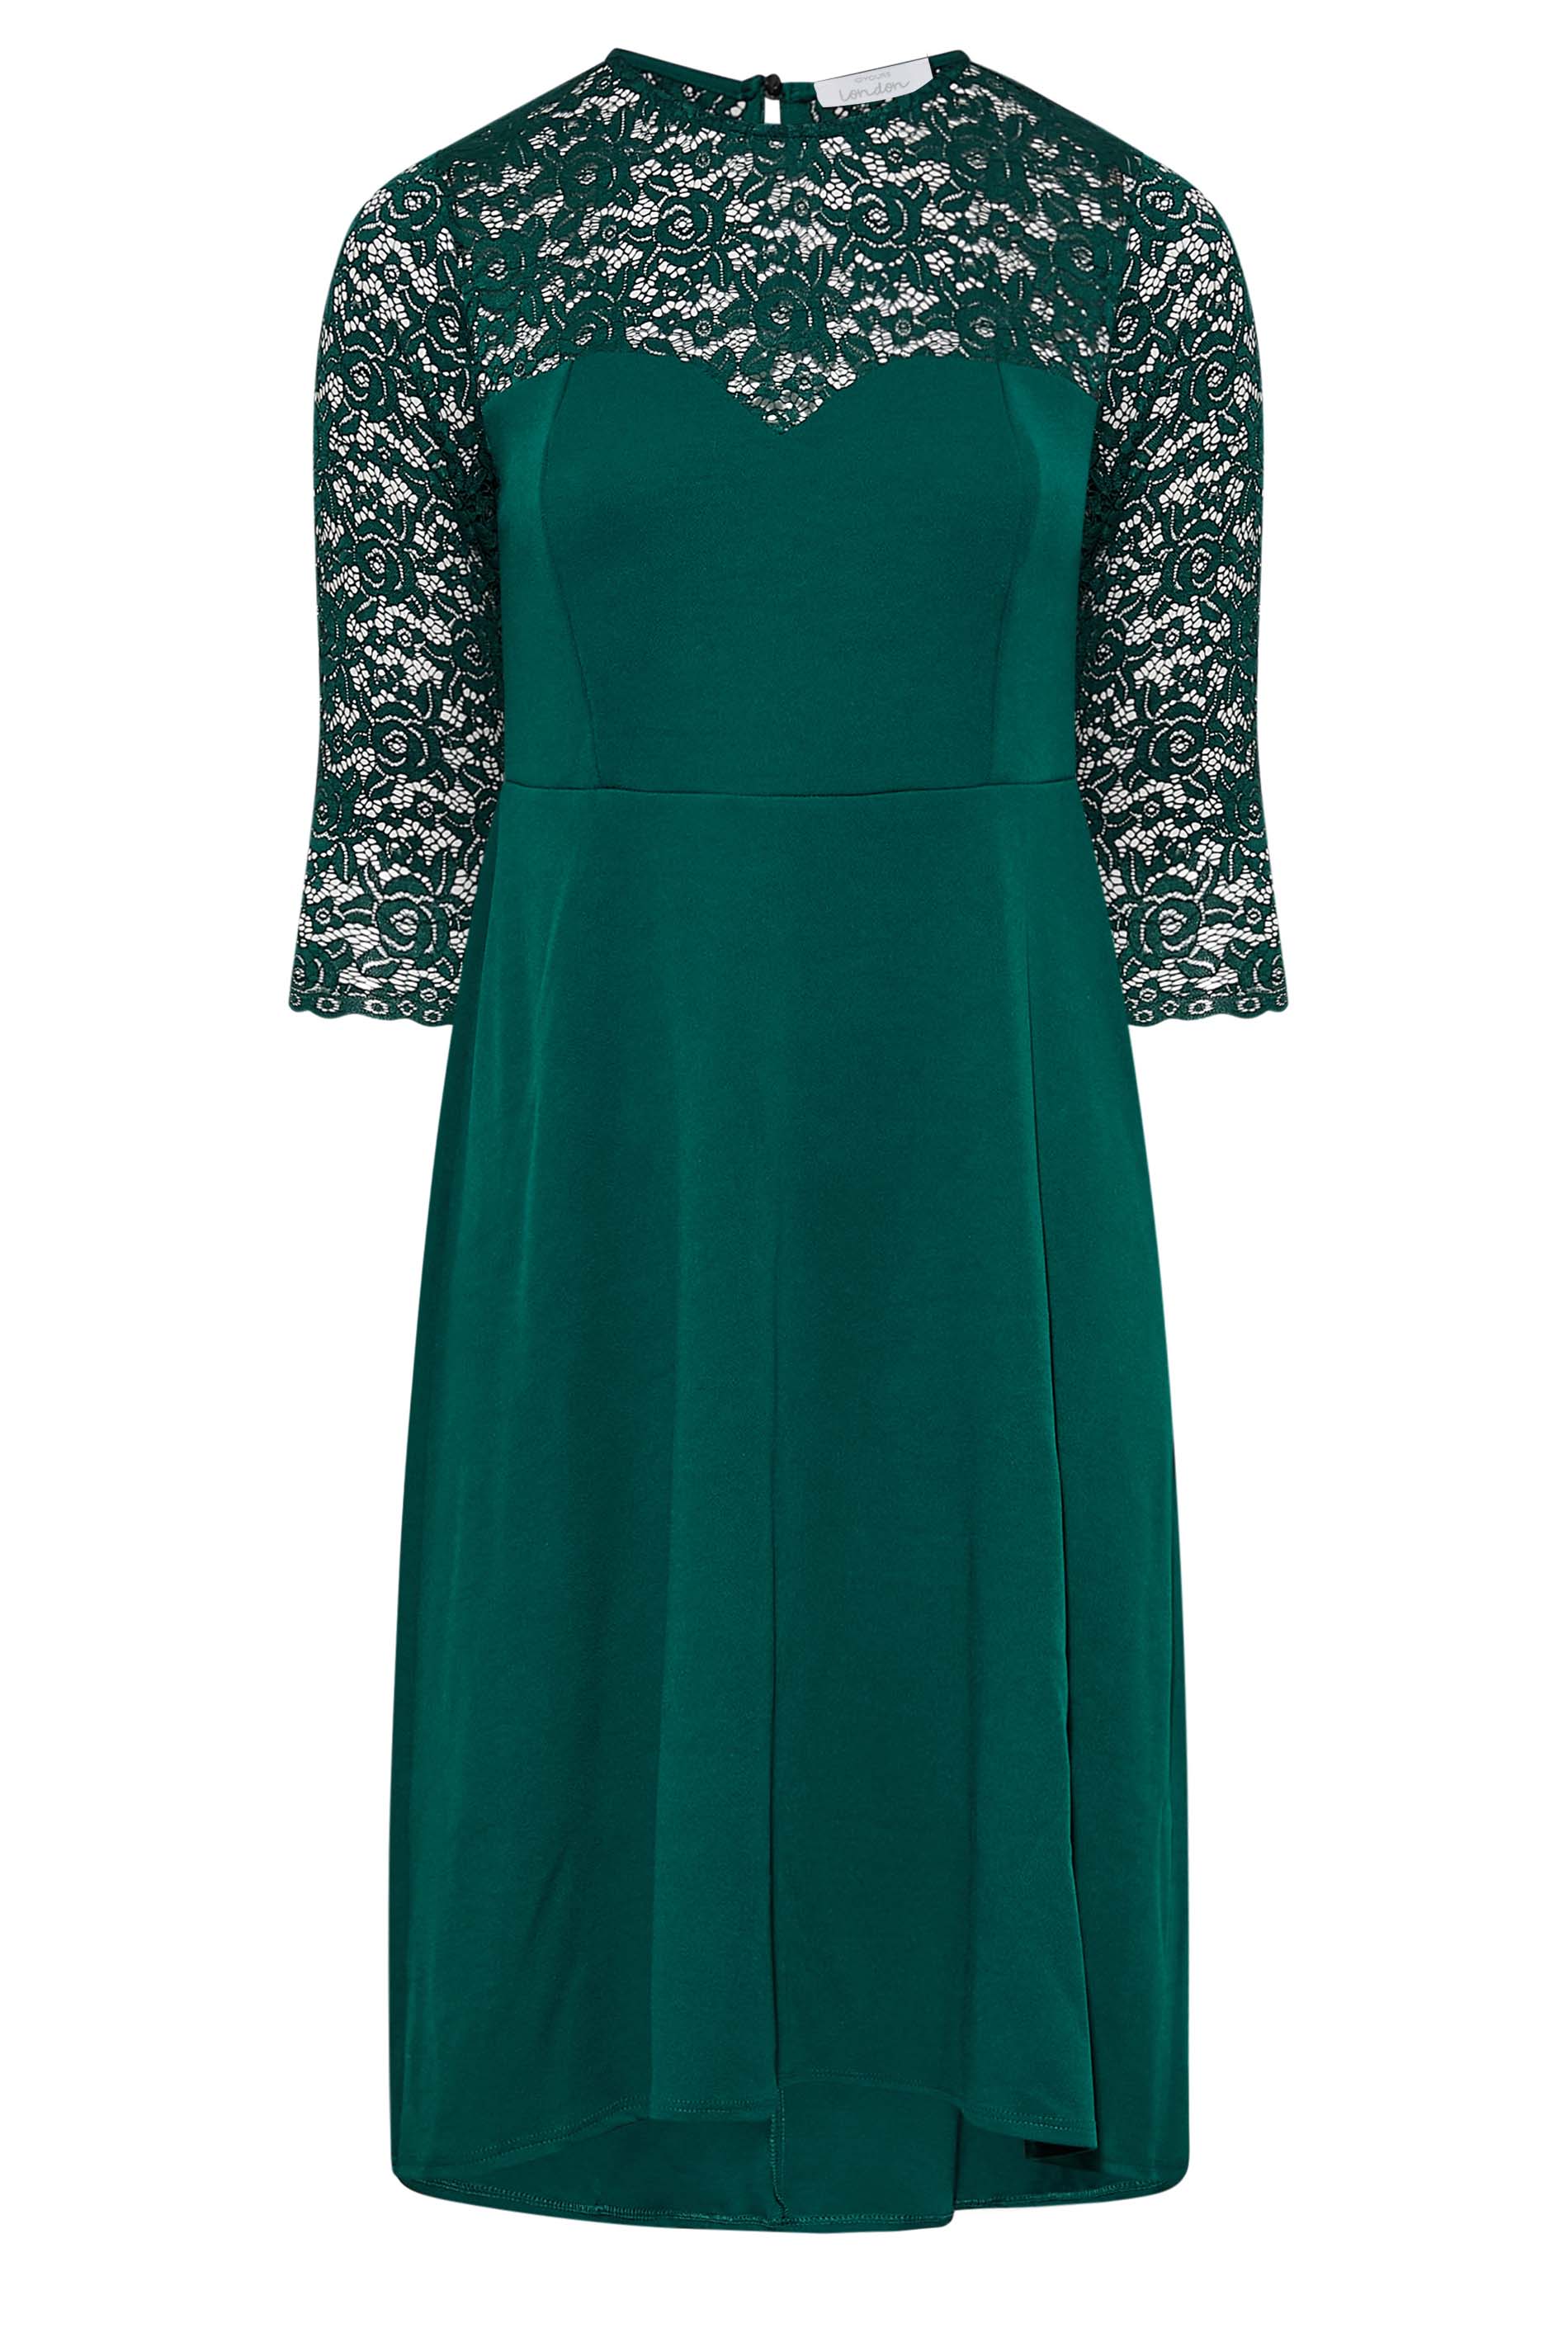 Pearson Emerald Green Lace Short Sleeve Dress